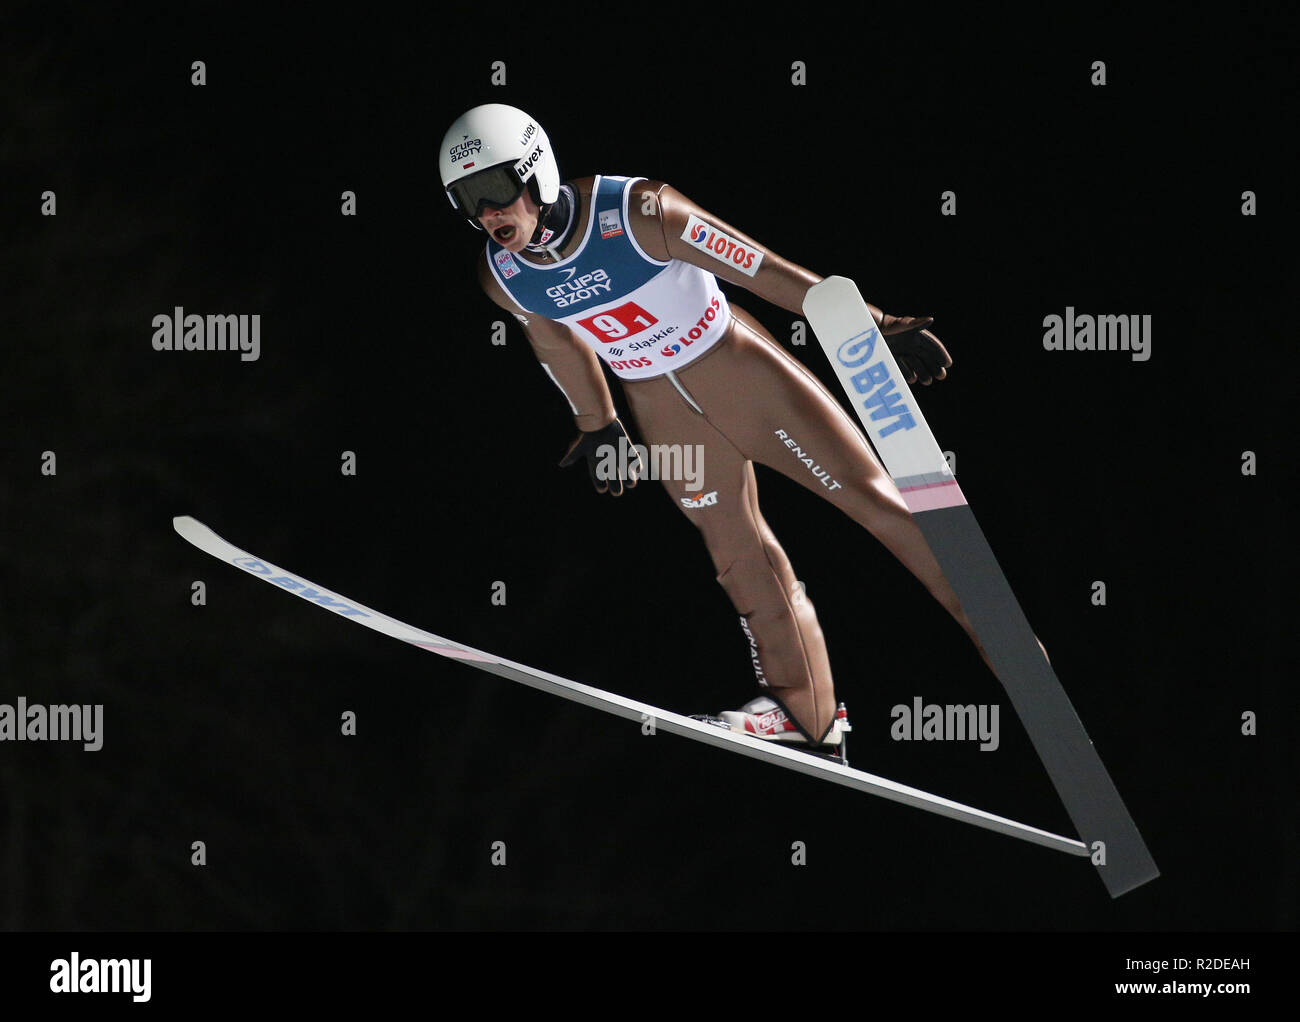 Piotr Zyla  World Cup FIS Ski Jumping on November 17, 2018 in Wisla, Poland. Stock Photo